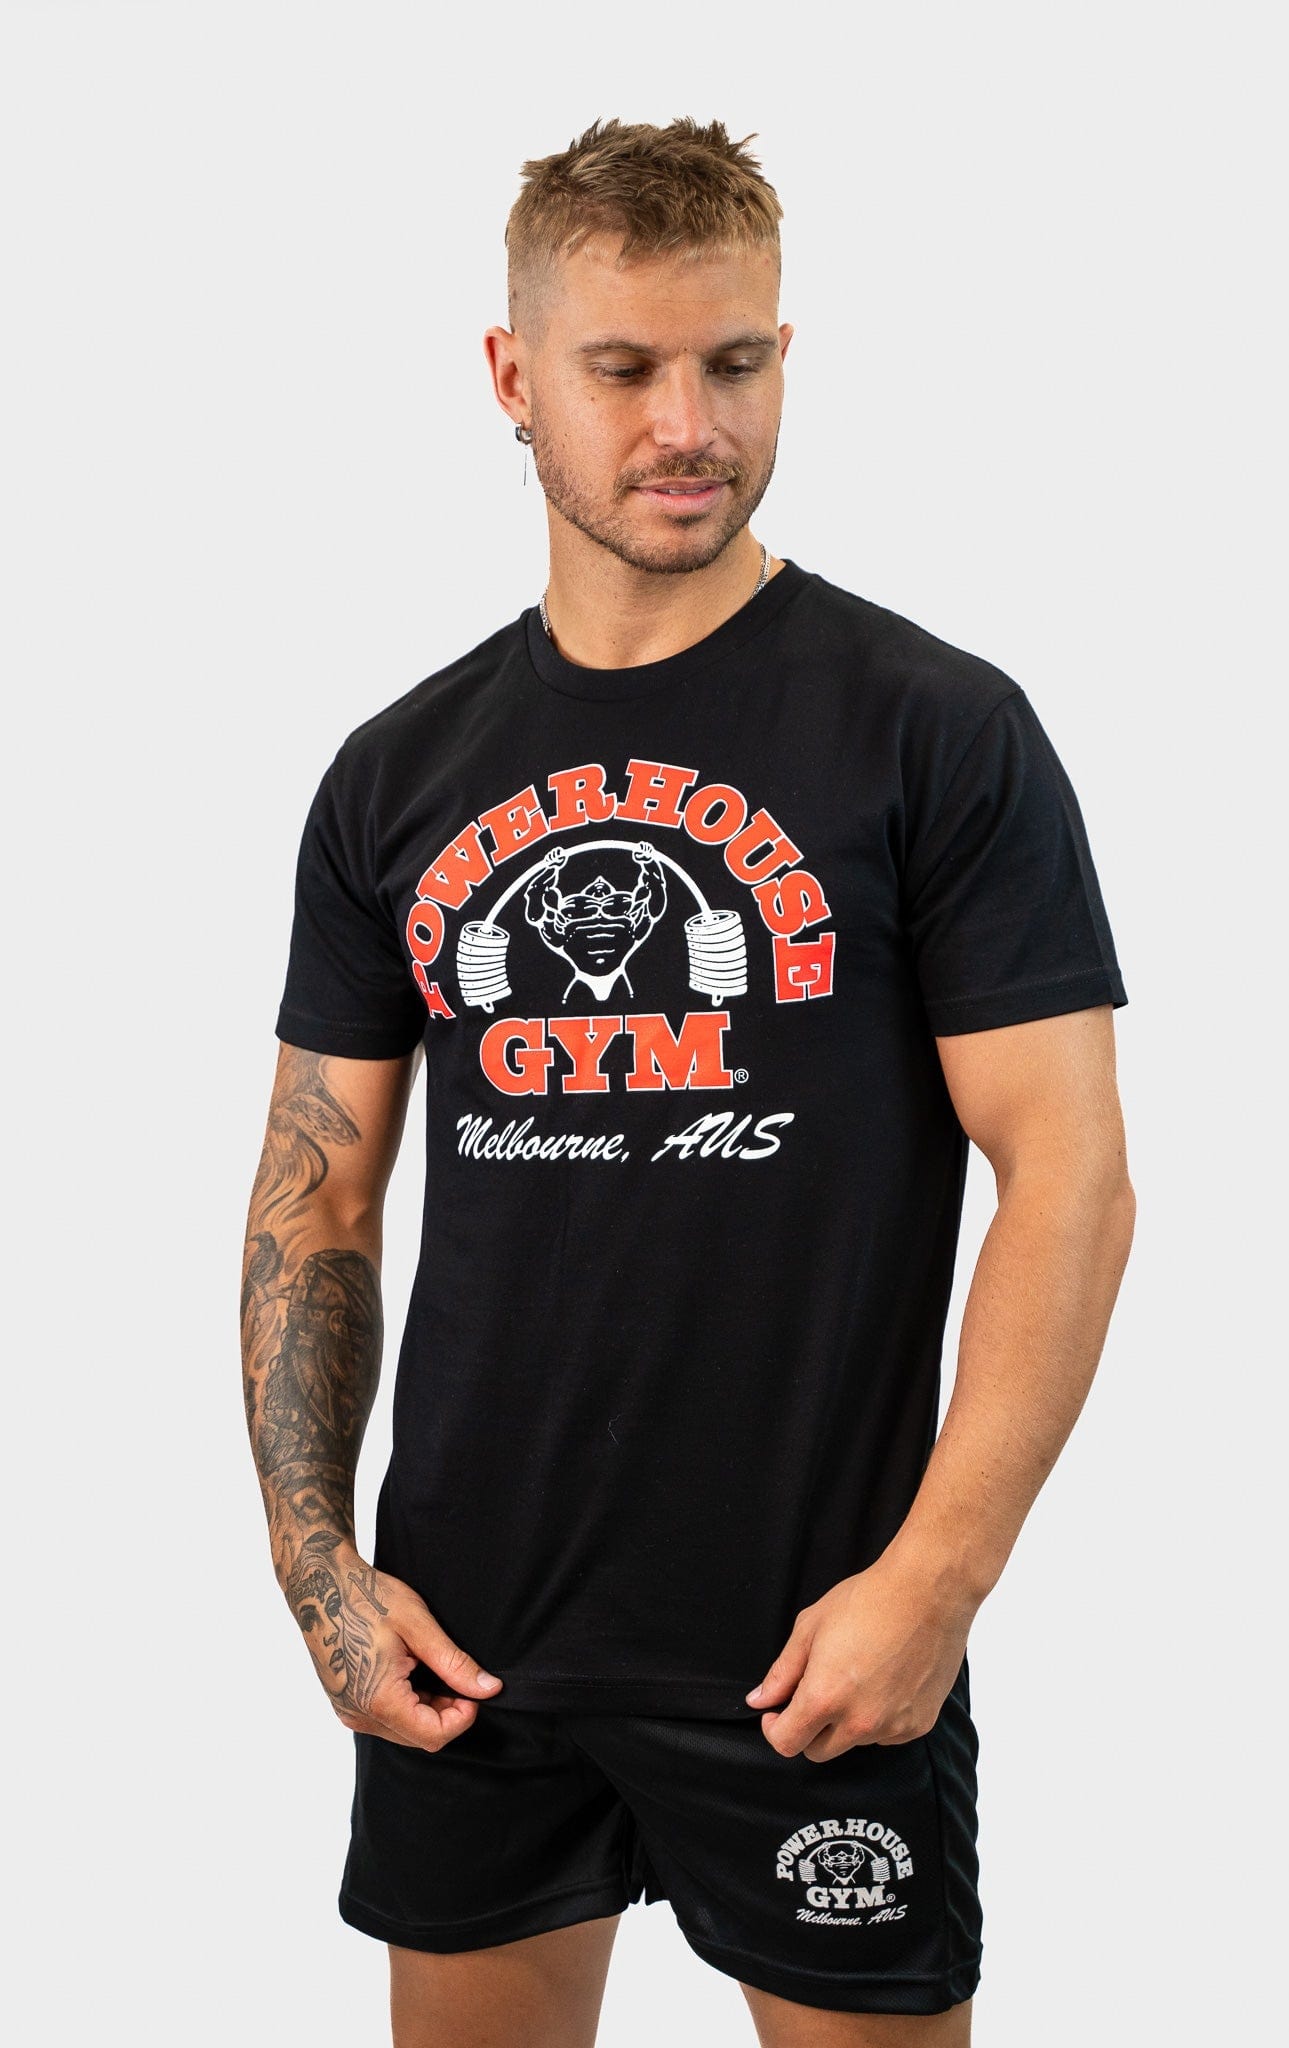 Powerhouse Gym Pro Shop Block T-Shirt Black/Red